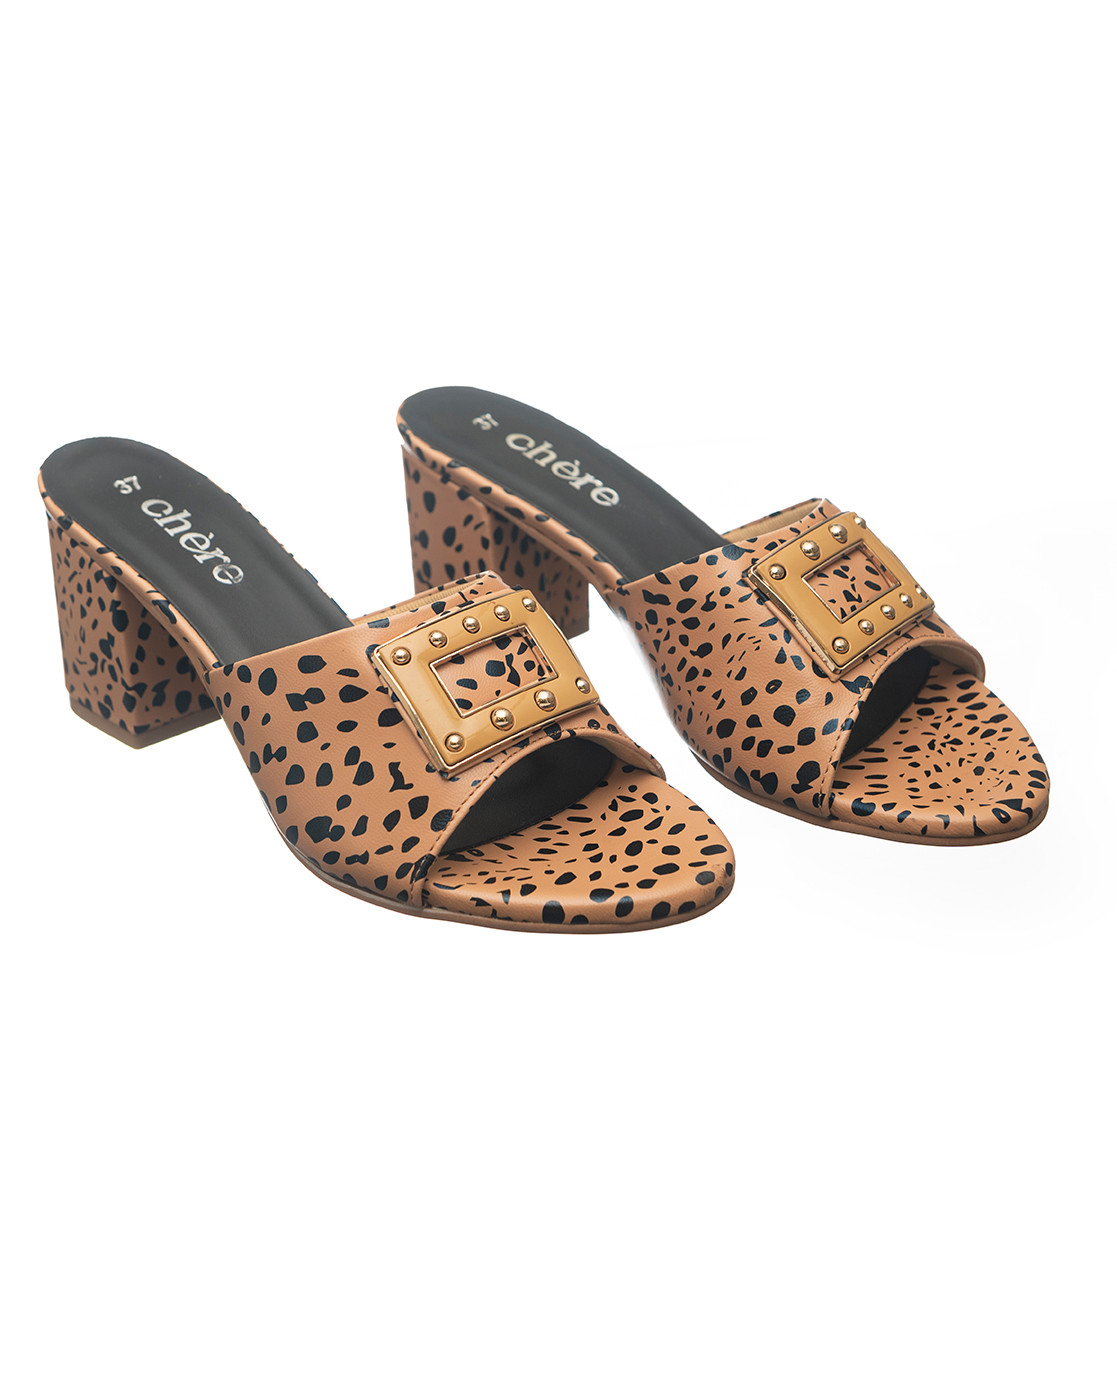 Michael Antonio Shoes Women's Size 10 Leopard Print Heeled Sandals | eBay